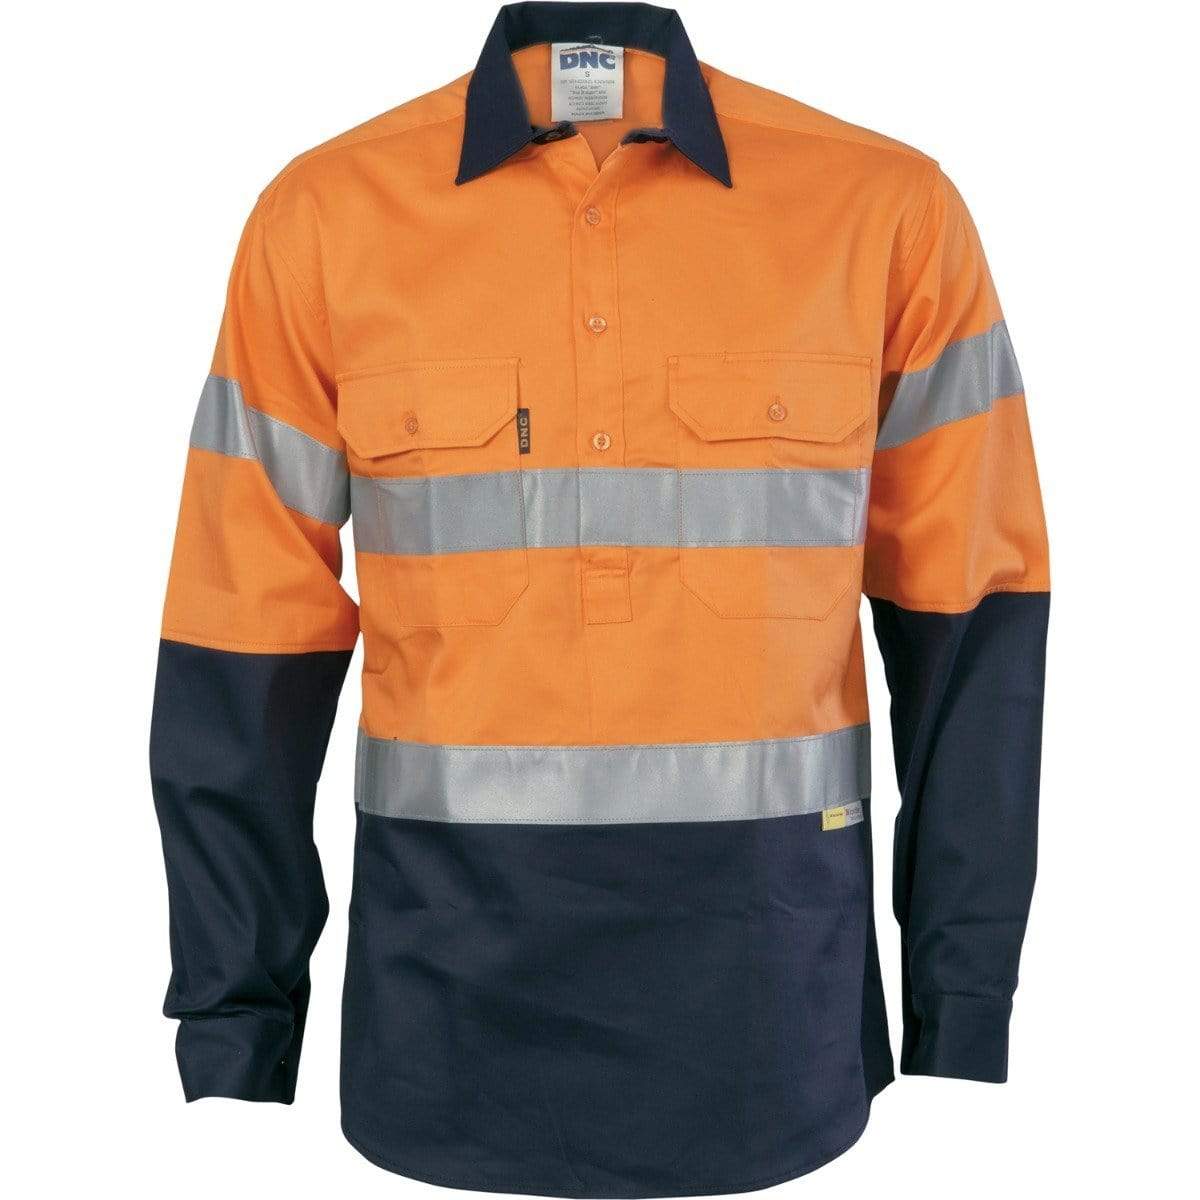 Dnc Workwear Hi-vis Cool-breeze Close Front Long Sleeve Cotton Shirt With 3m Reflective Tape - 3949 Work Wear DNC Workwear Orange/Navy S 